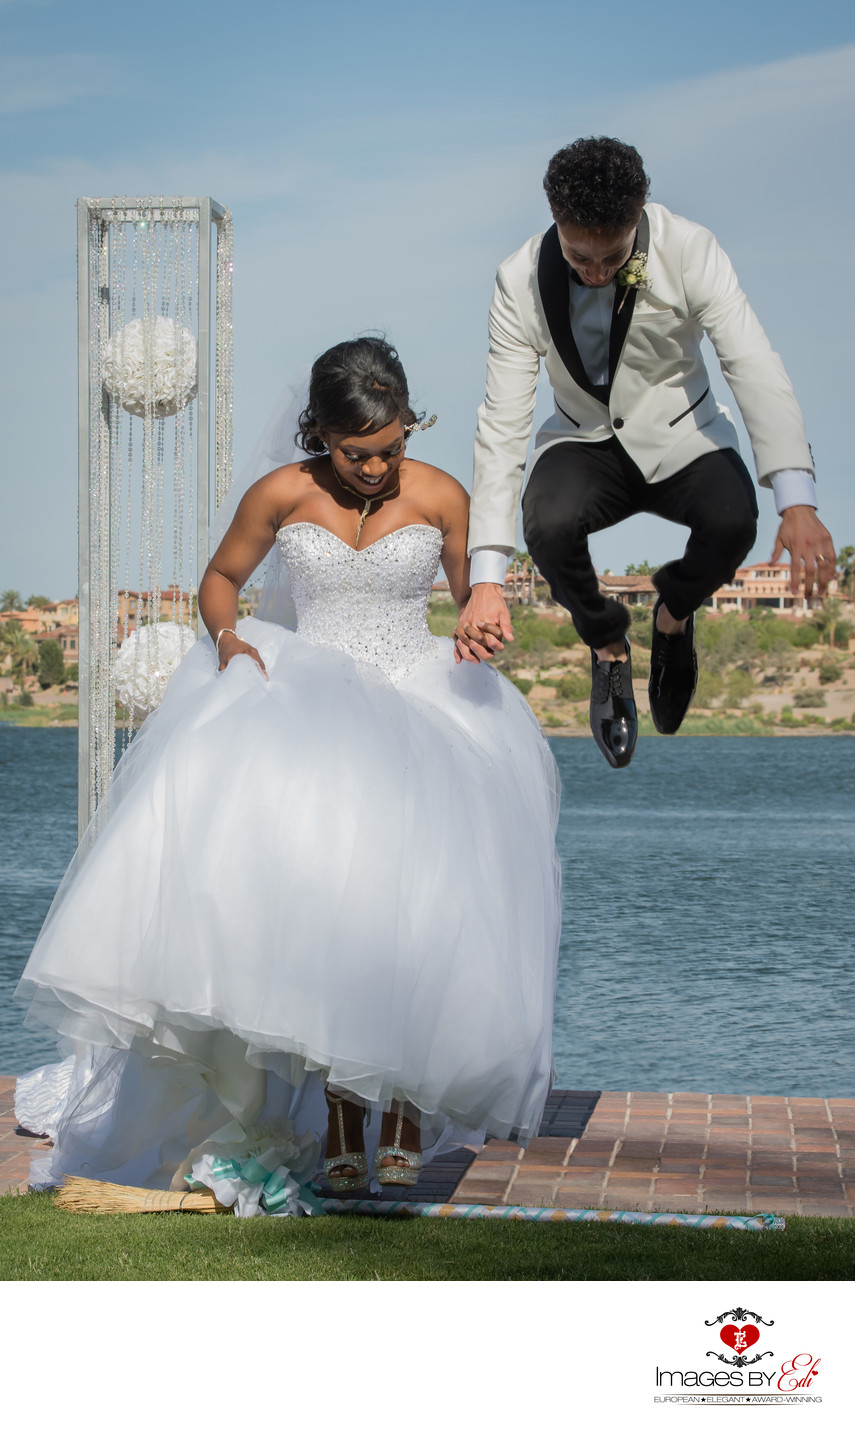 Reflection Bay Las Vegas Wedding Photography | Vegas Wedding Photos | Groom Jumping Over the Broom During Reflection Bay Las Vegas Wedding Ceremony | Images by EDI